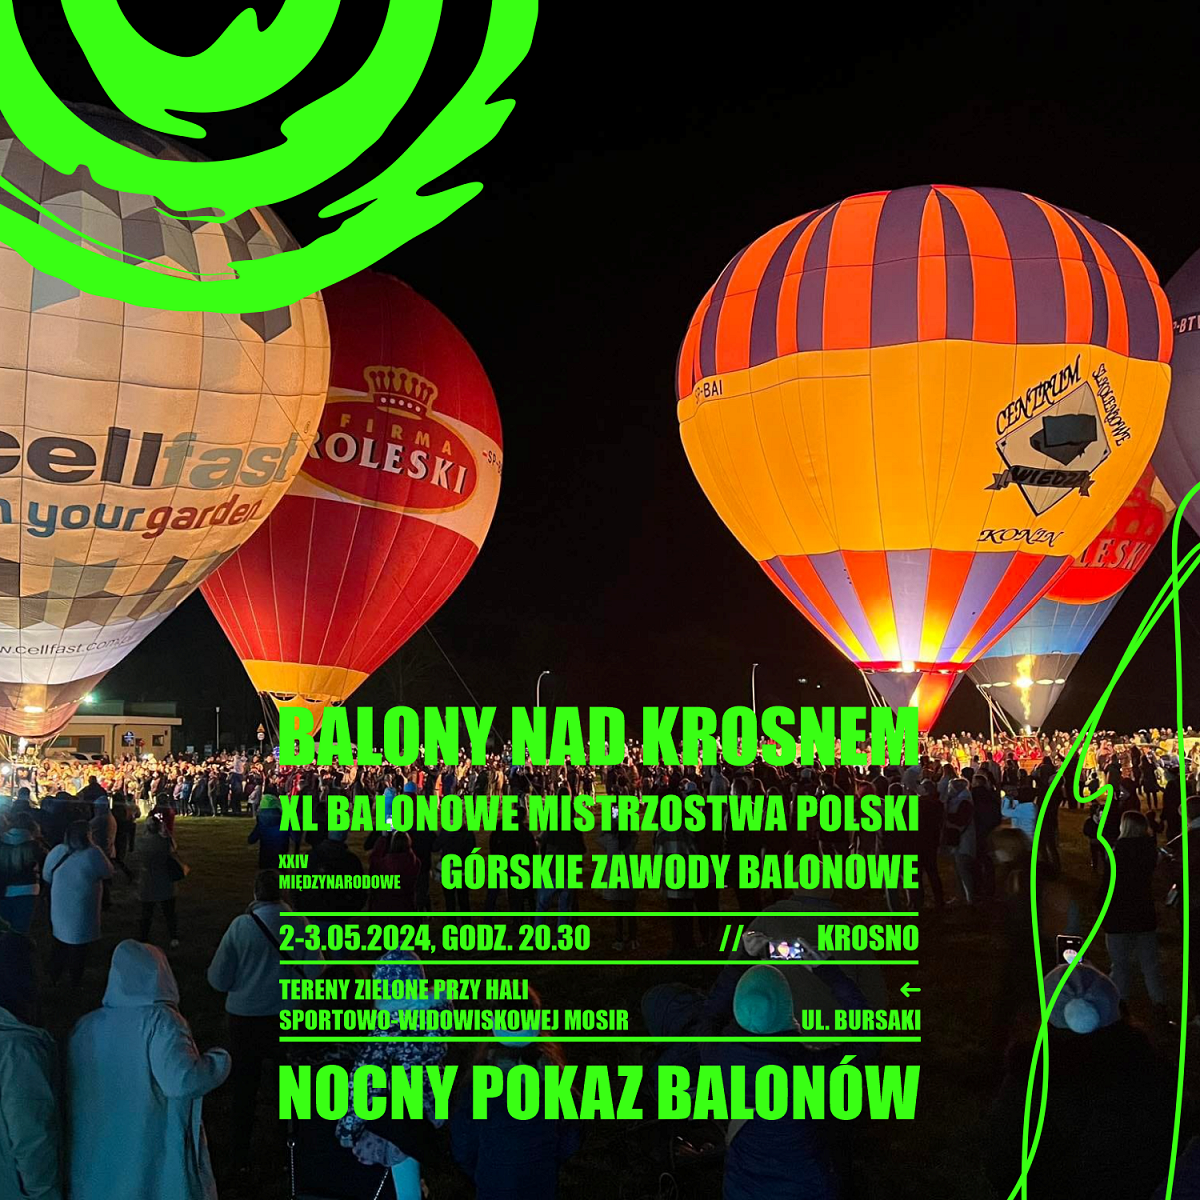 Balony nad Krosnem 2024 kwadrat nocny pokaz balonów_fot. Paweł Matelowski.png [3.01 MB]